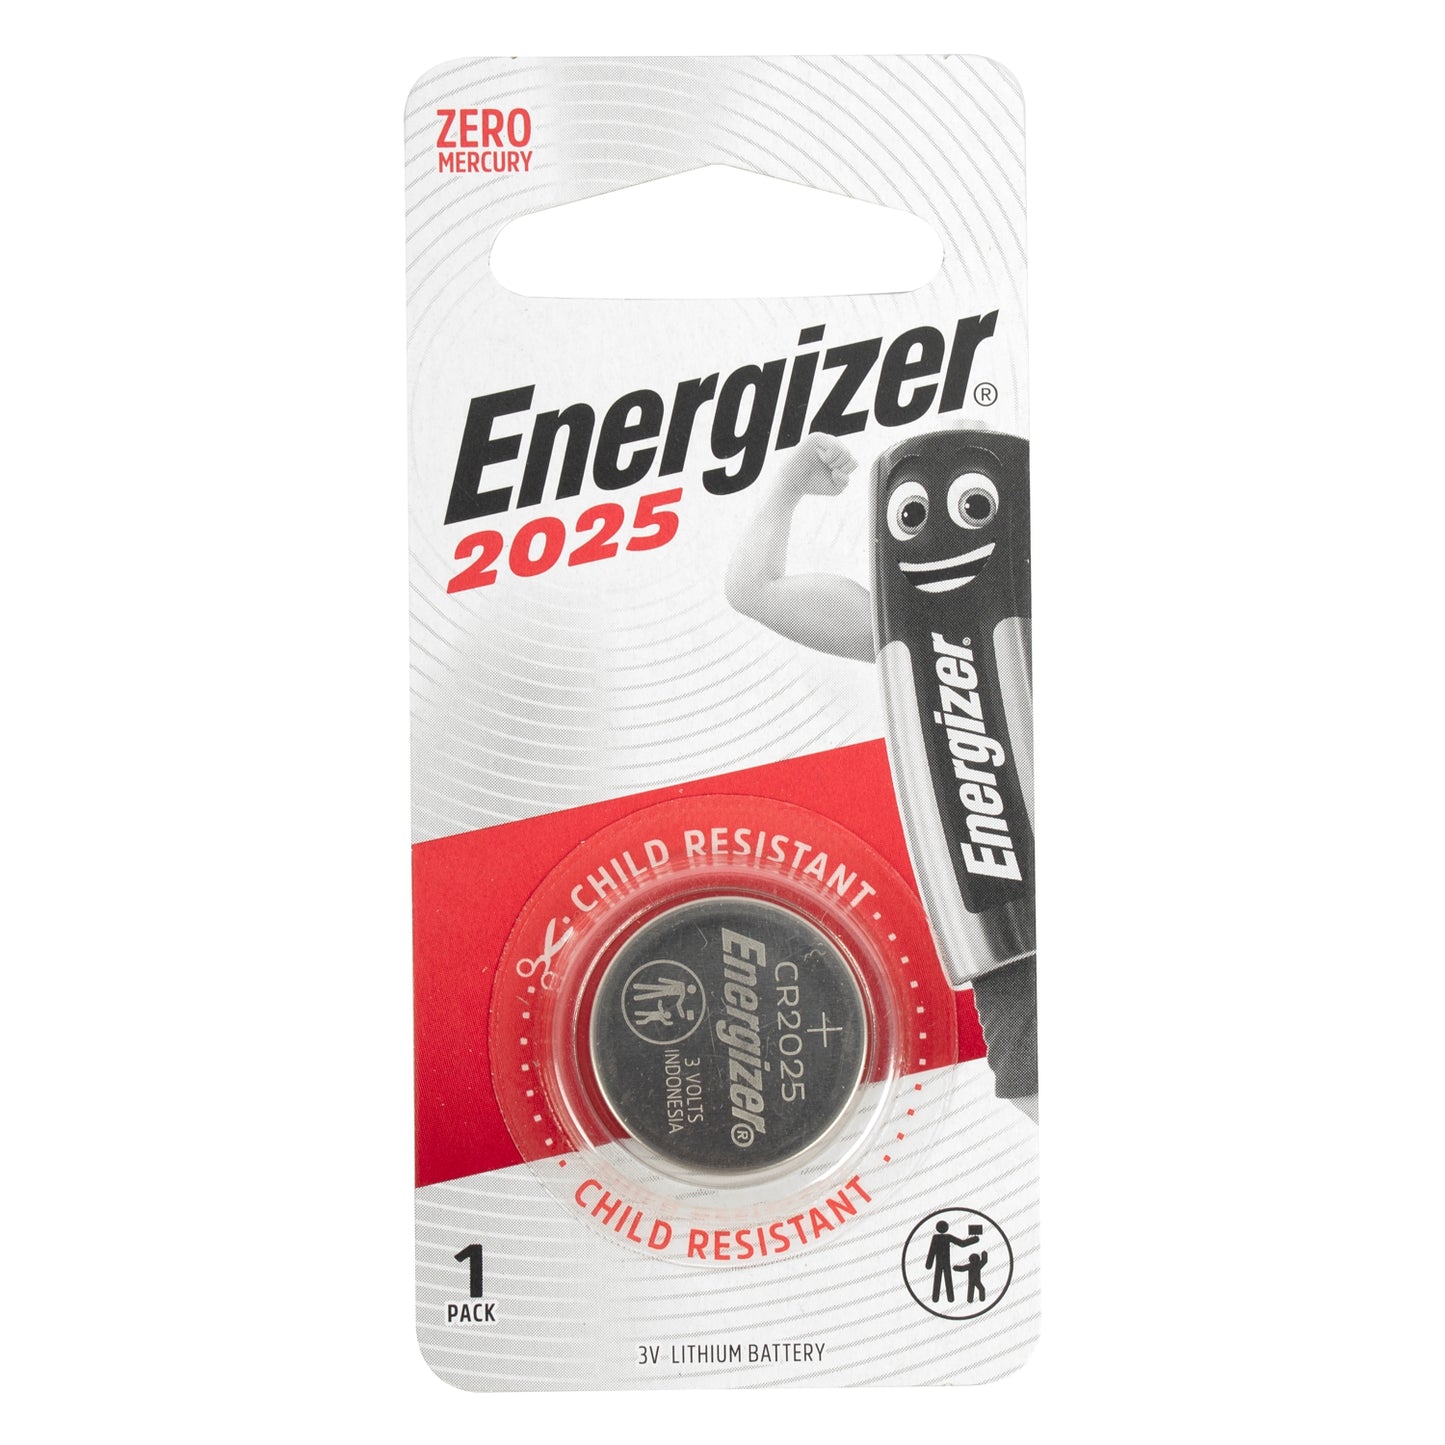 Energizer cr2025 3v lithium coin battery 1 pack (moq12)